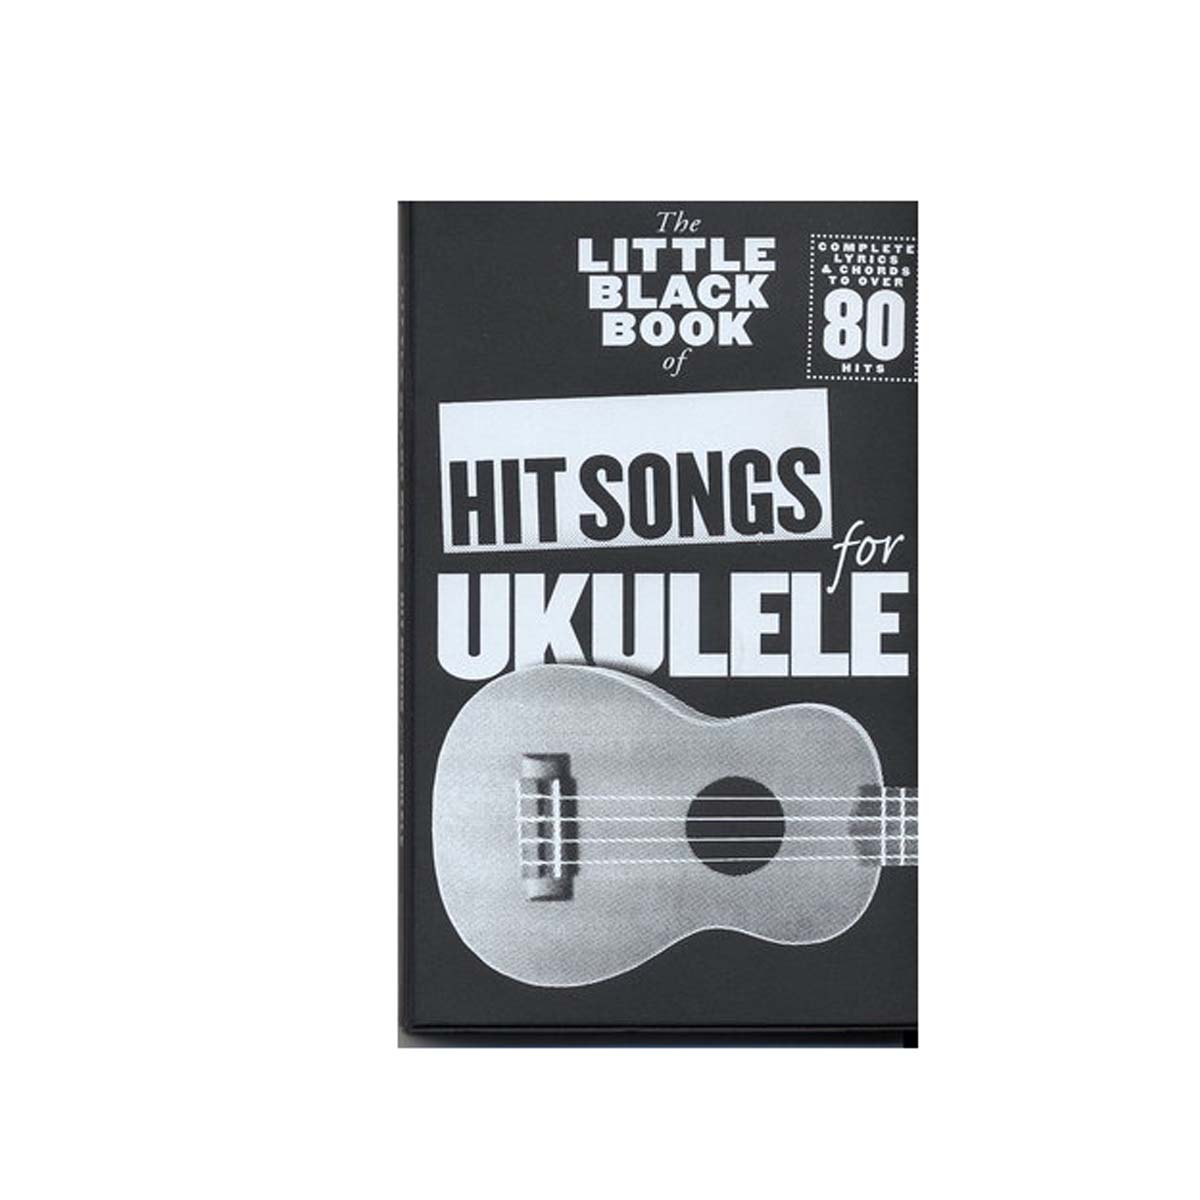 Liittle black book - Hit songs for ukulélé